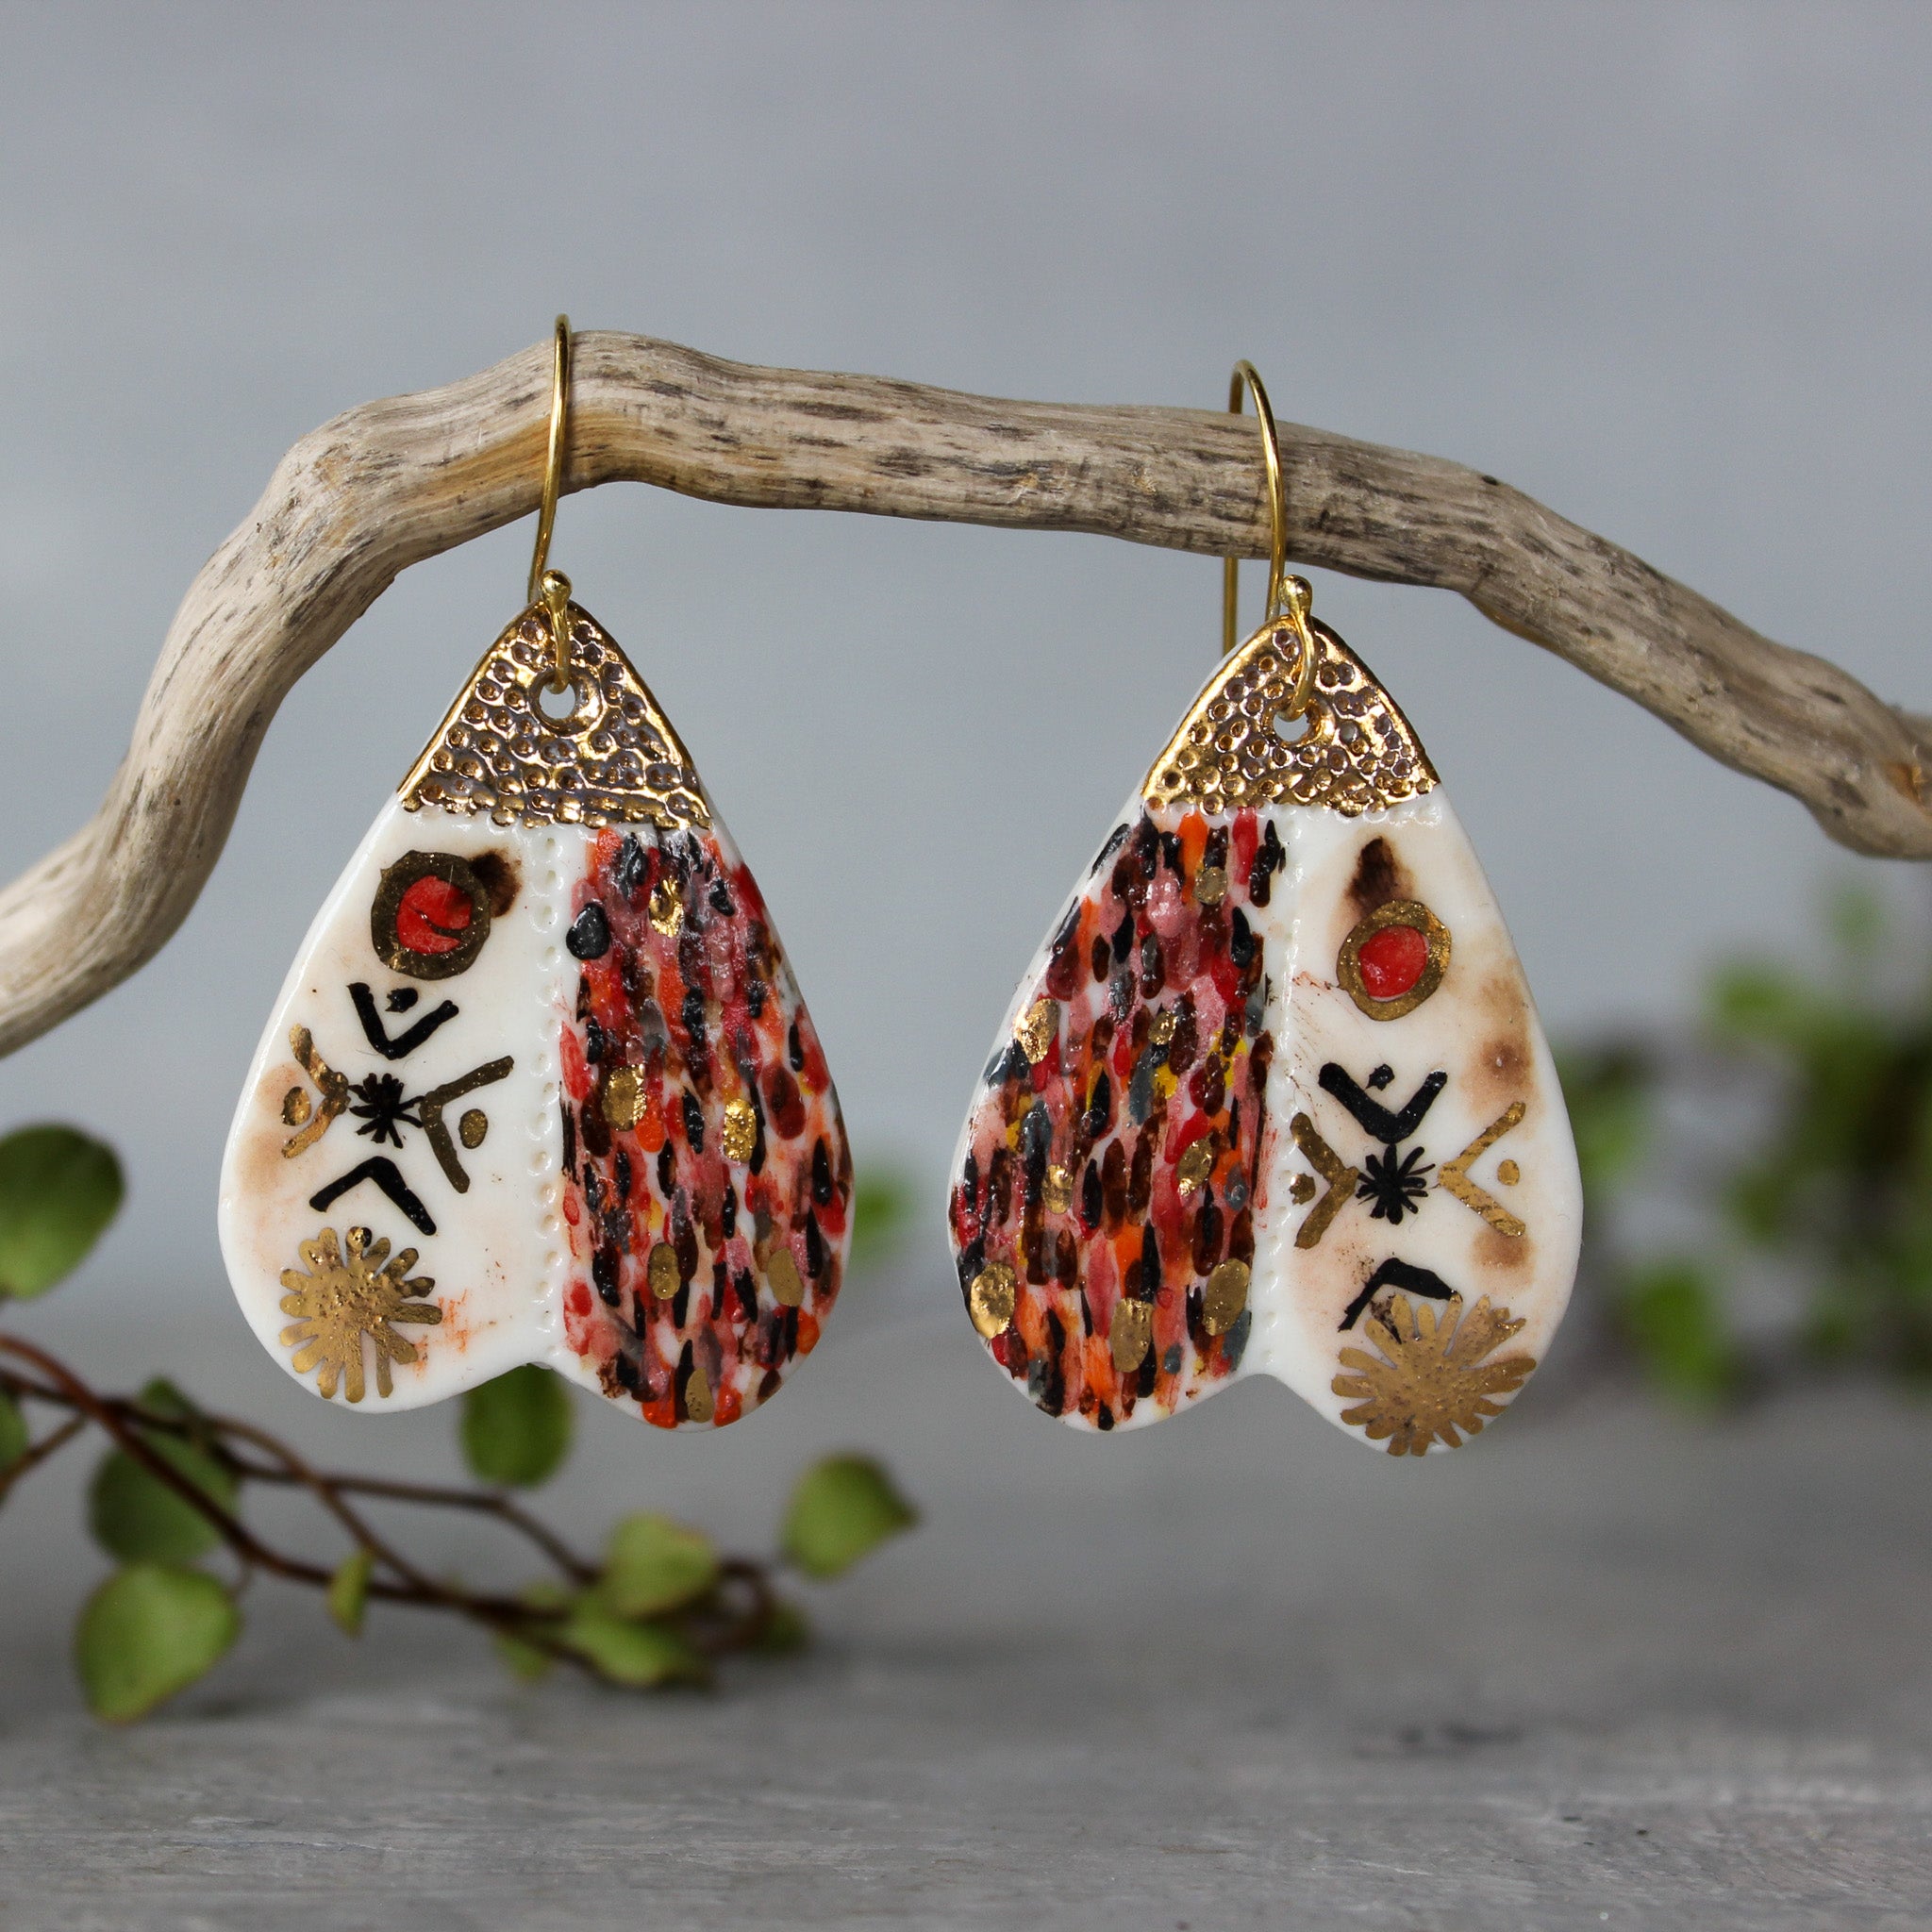 Ceramic Earrings Red Wings #2 - Tribe Castlemaine